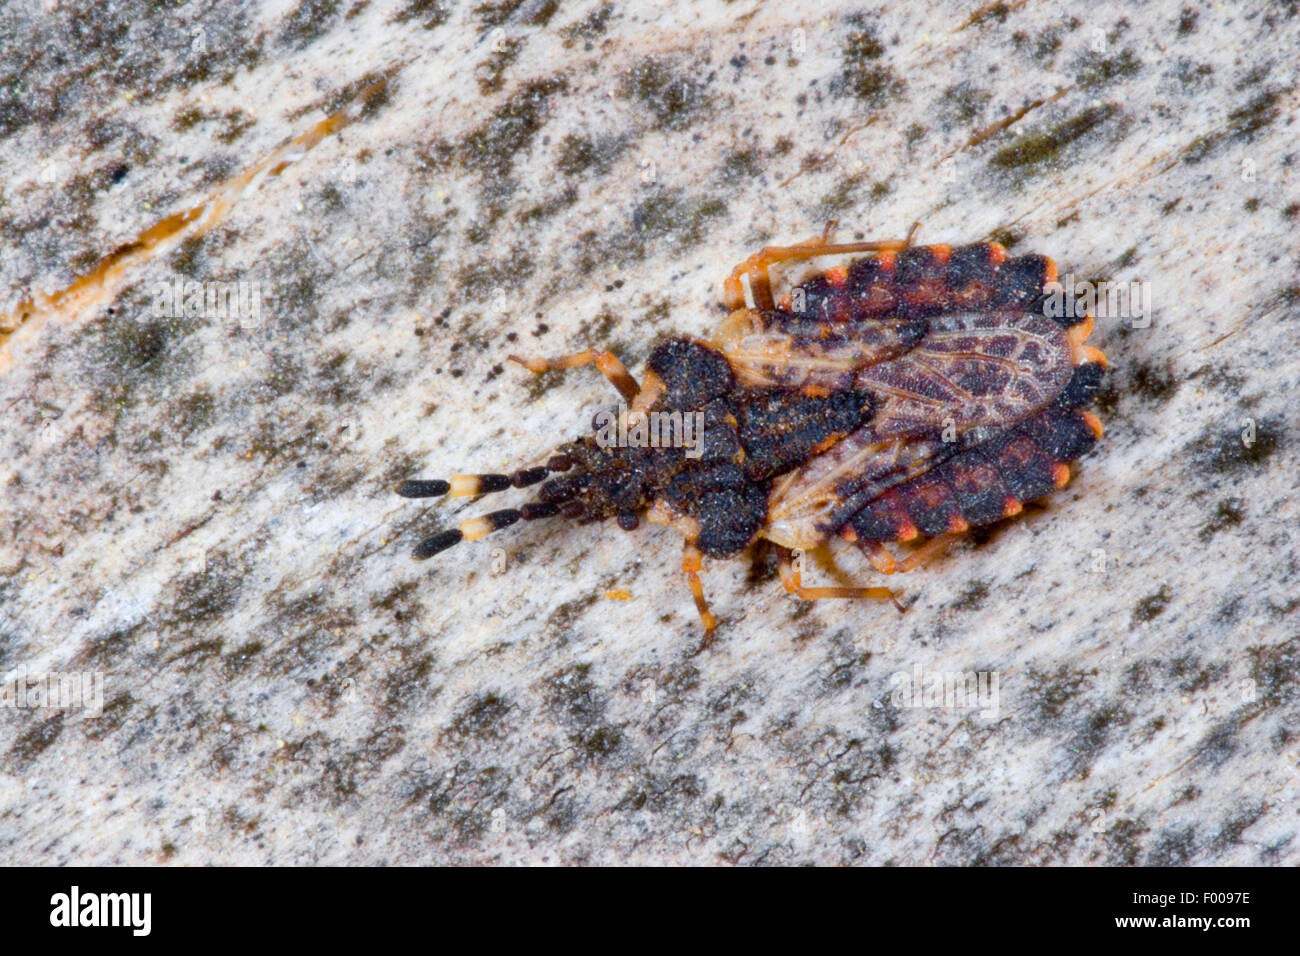 Flatbug (Aradus versicolor), Germany Stock Photo